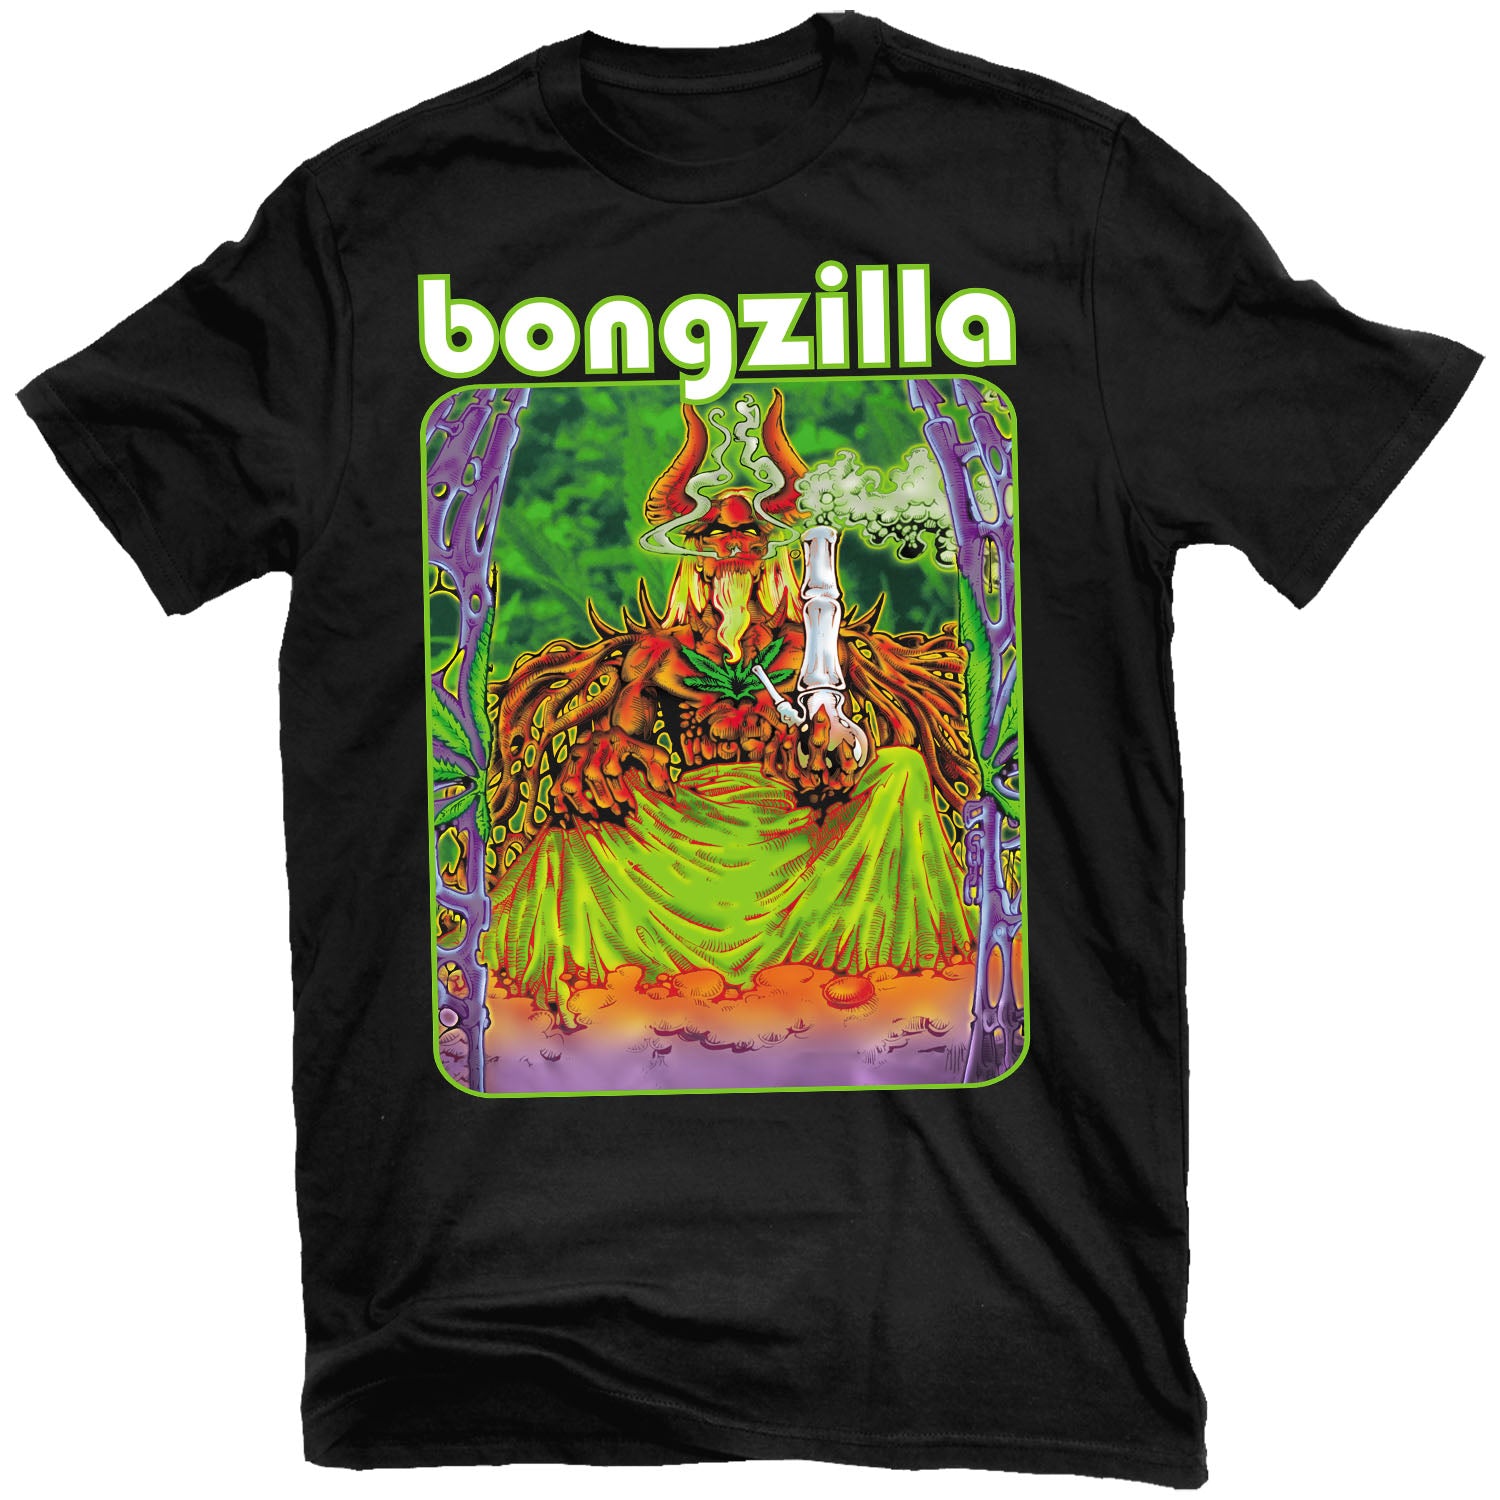 Bongzilla "Gateway Album Art" T-Shirt